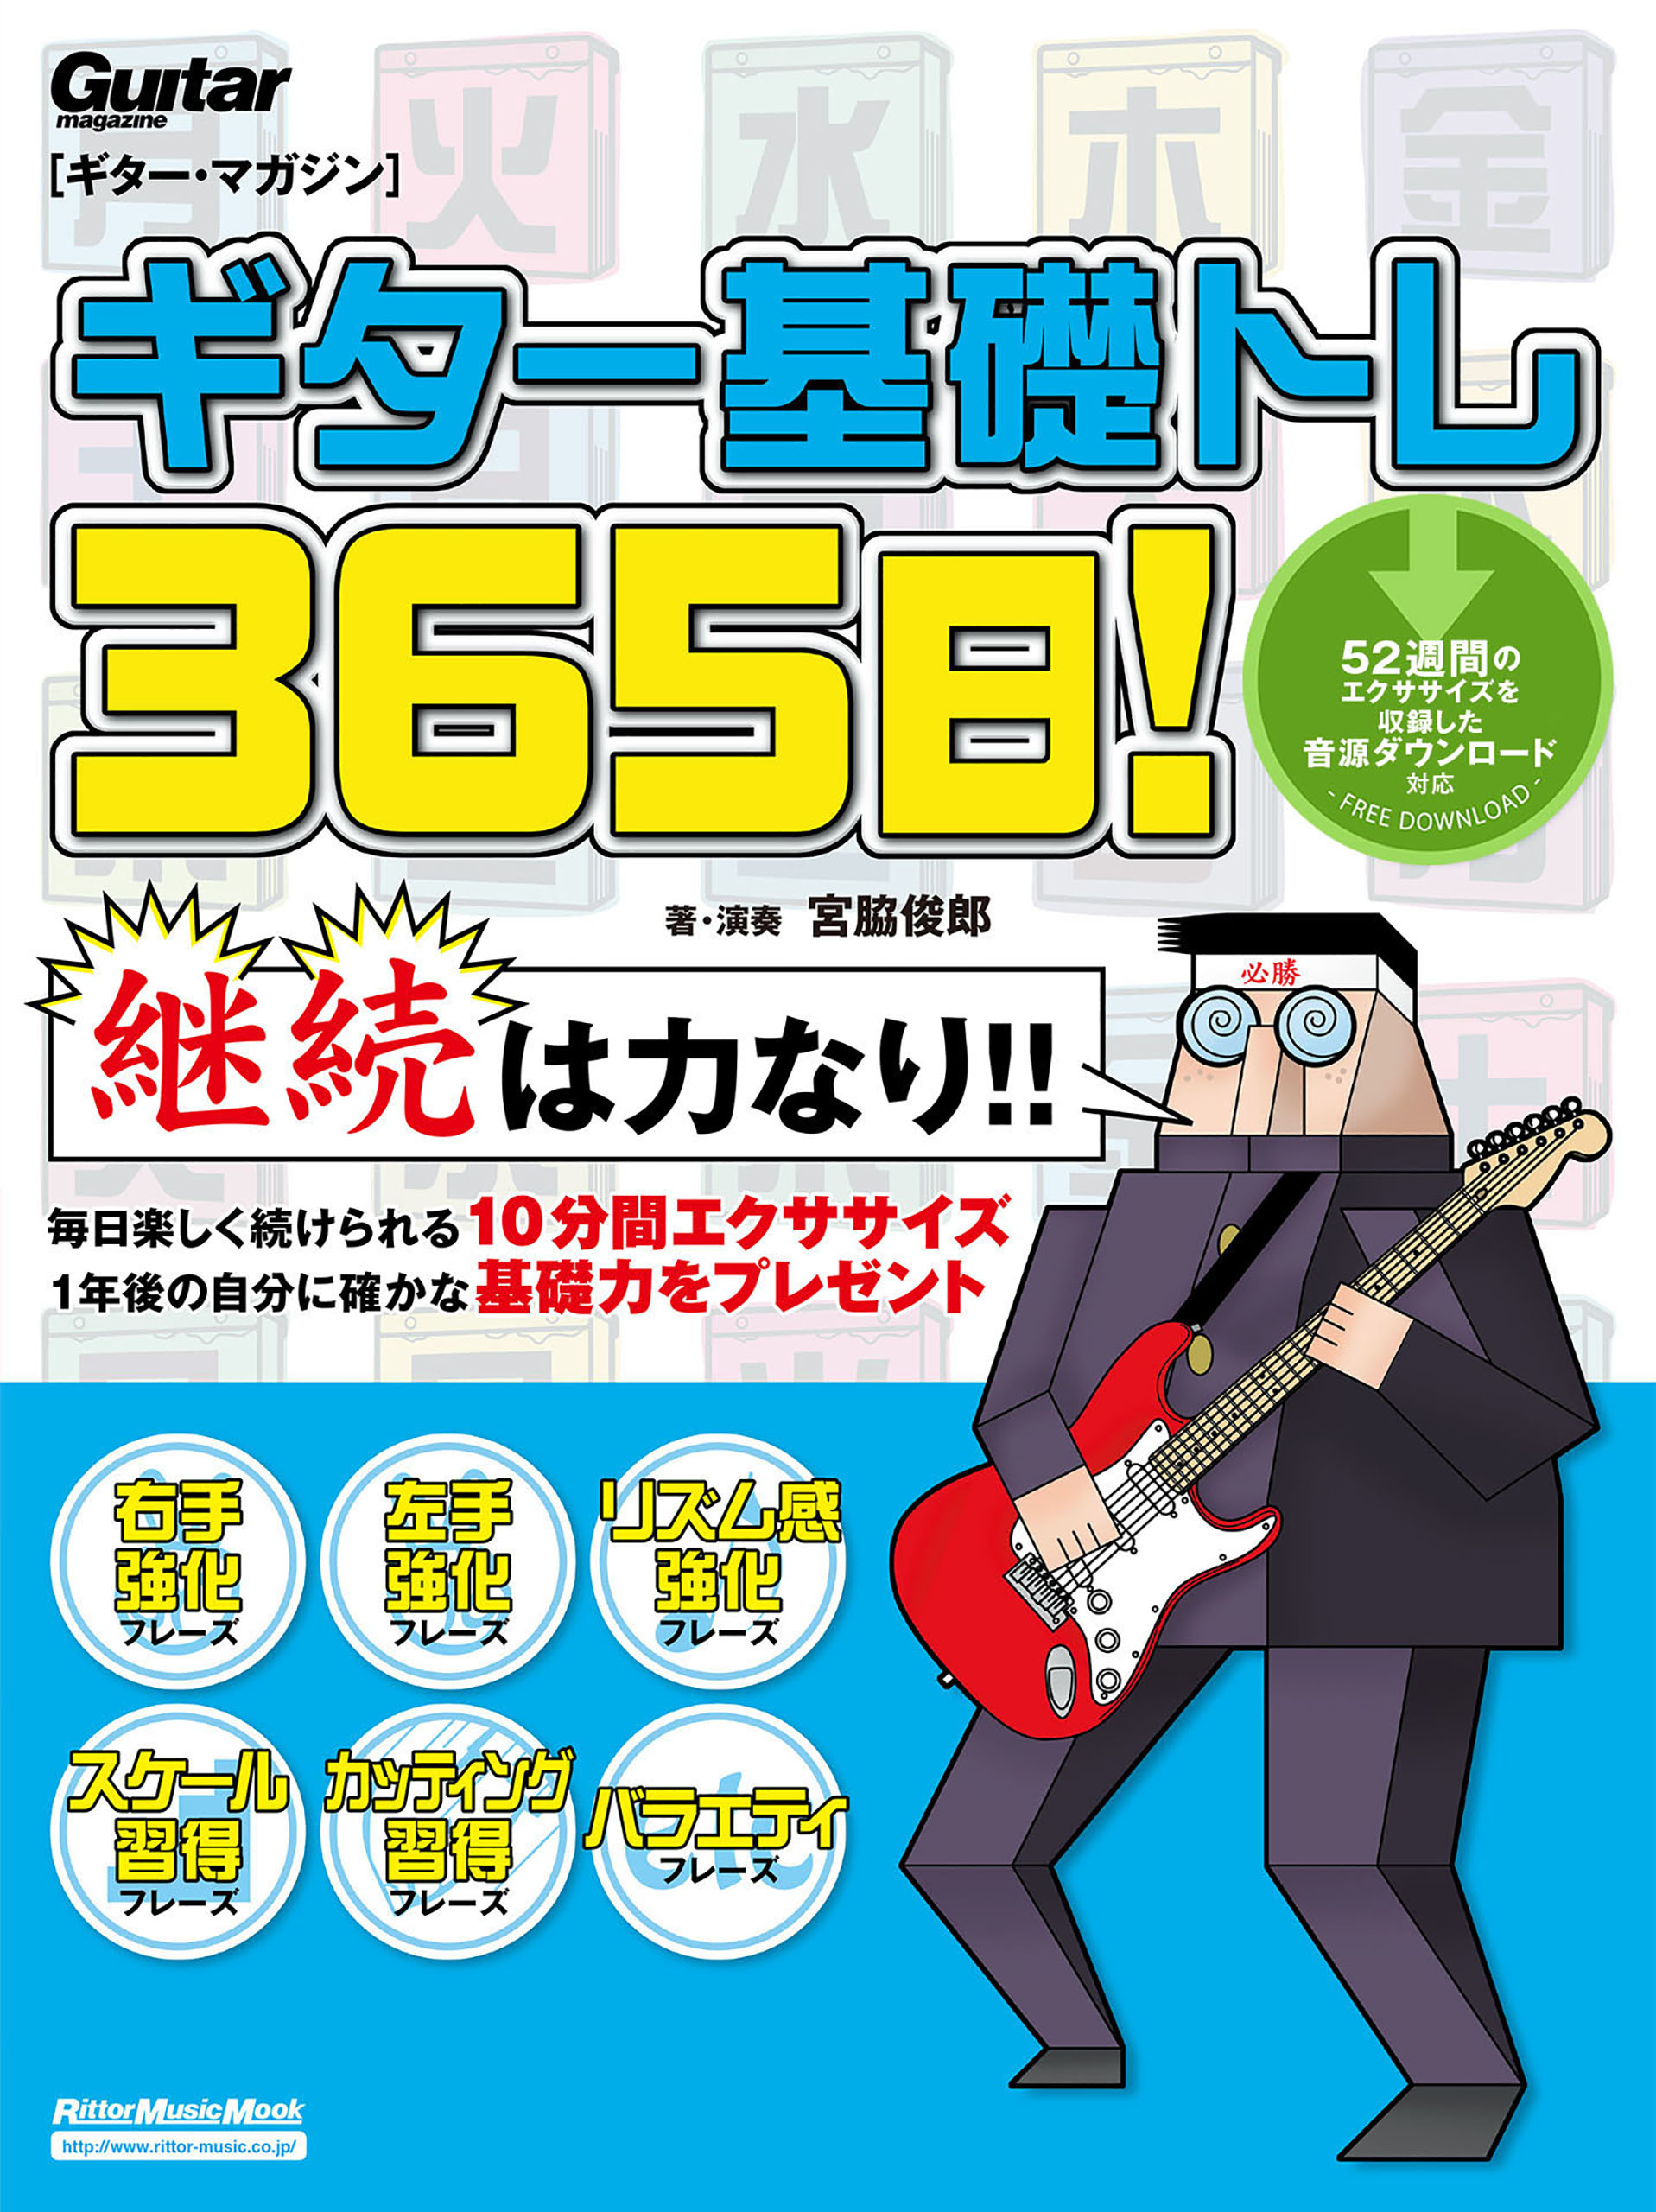 ギター基礎トレ365日！(書籍) - 電子書籍 | U-NEXT 初回600円分無料